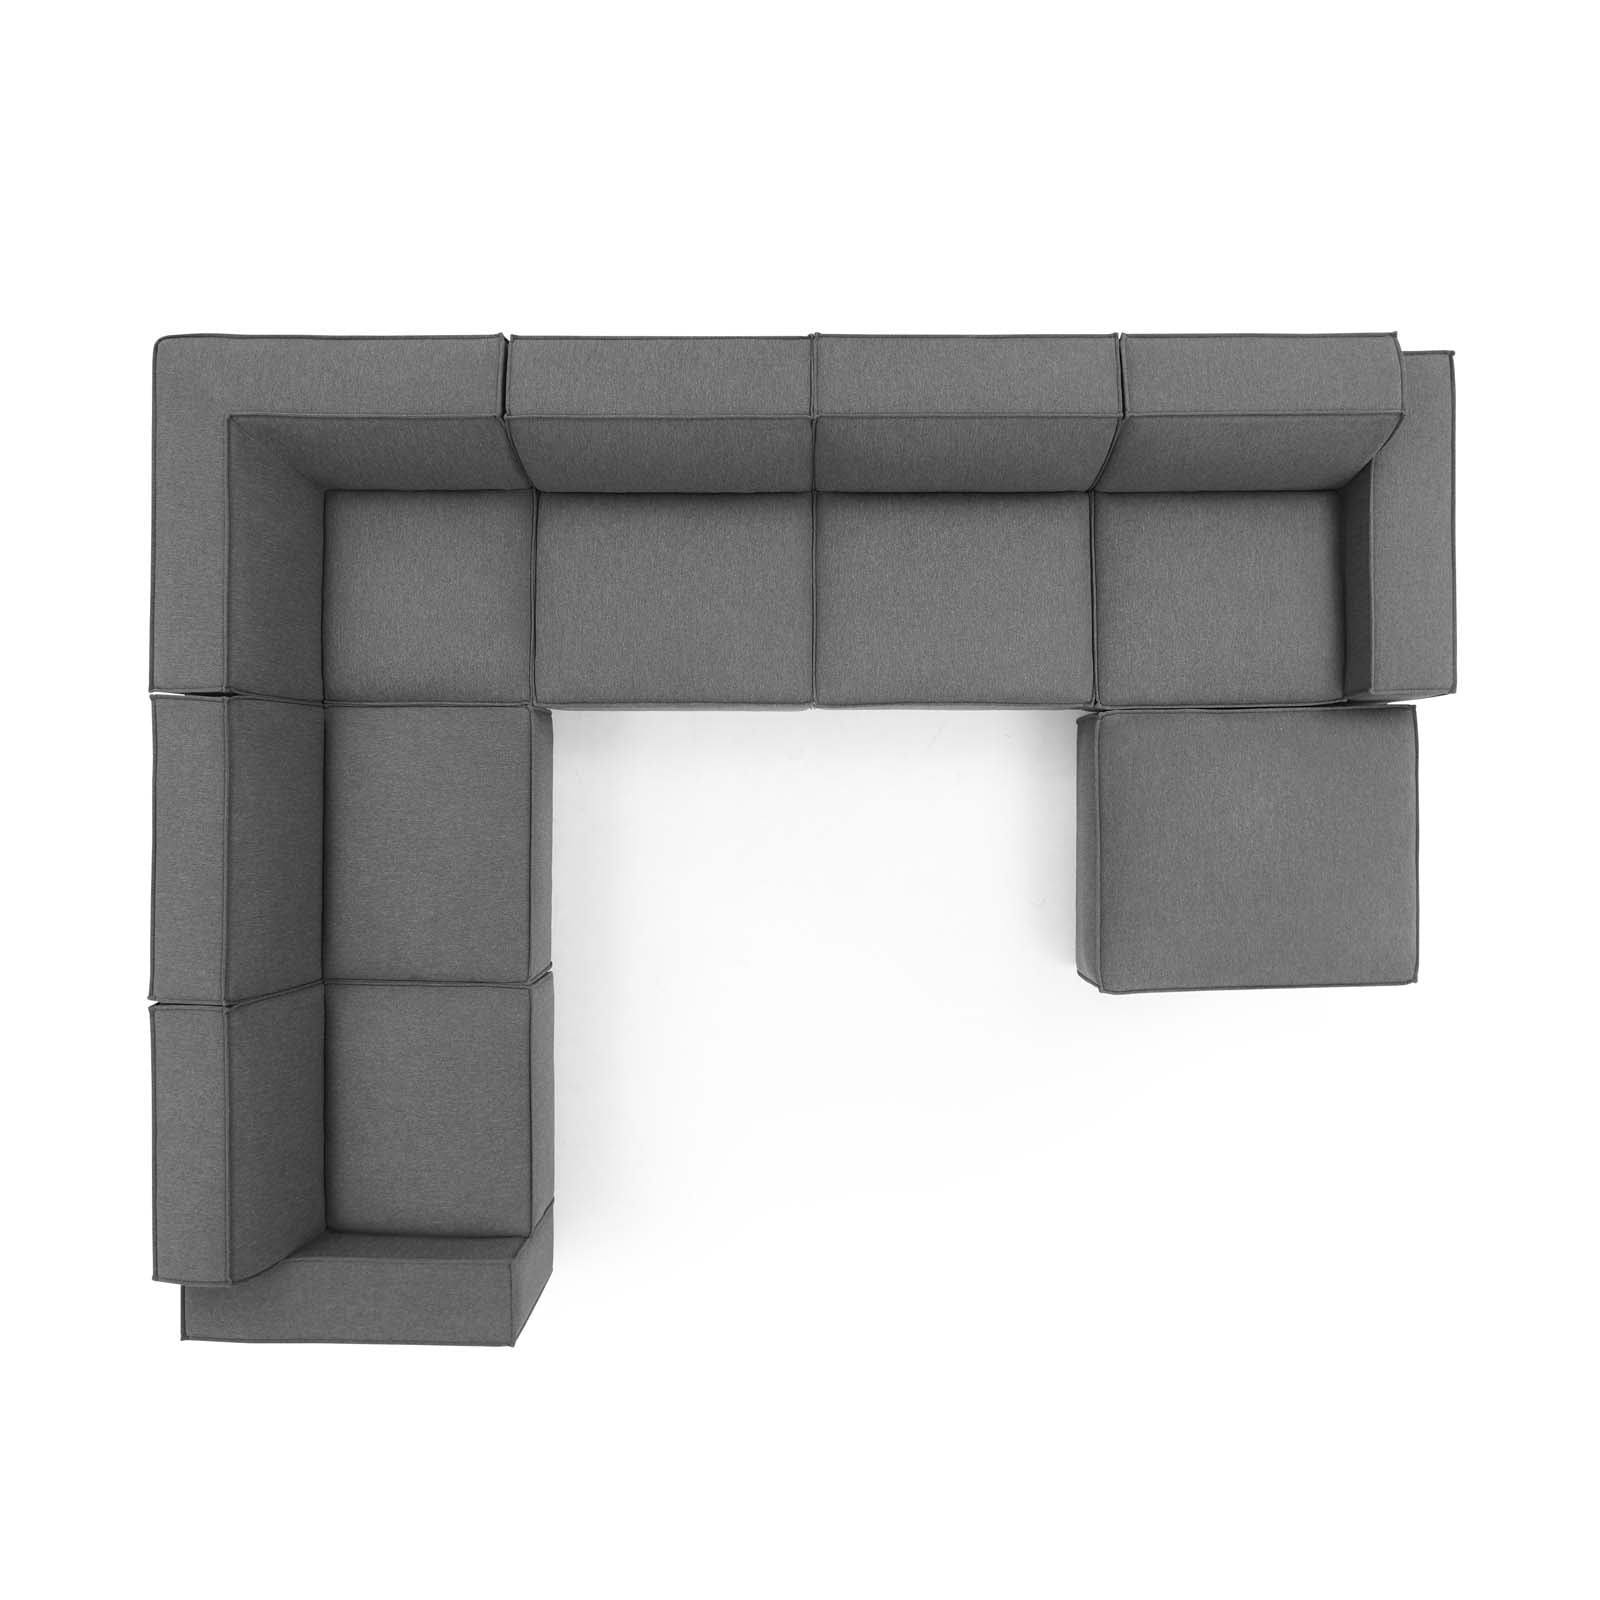 Restore 7-Piece Sectional Sofa